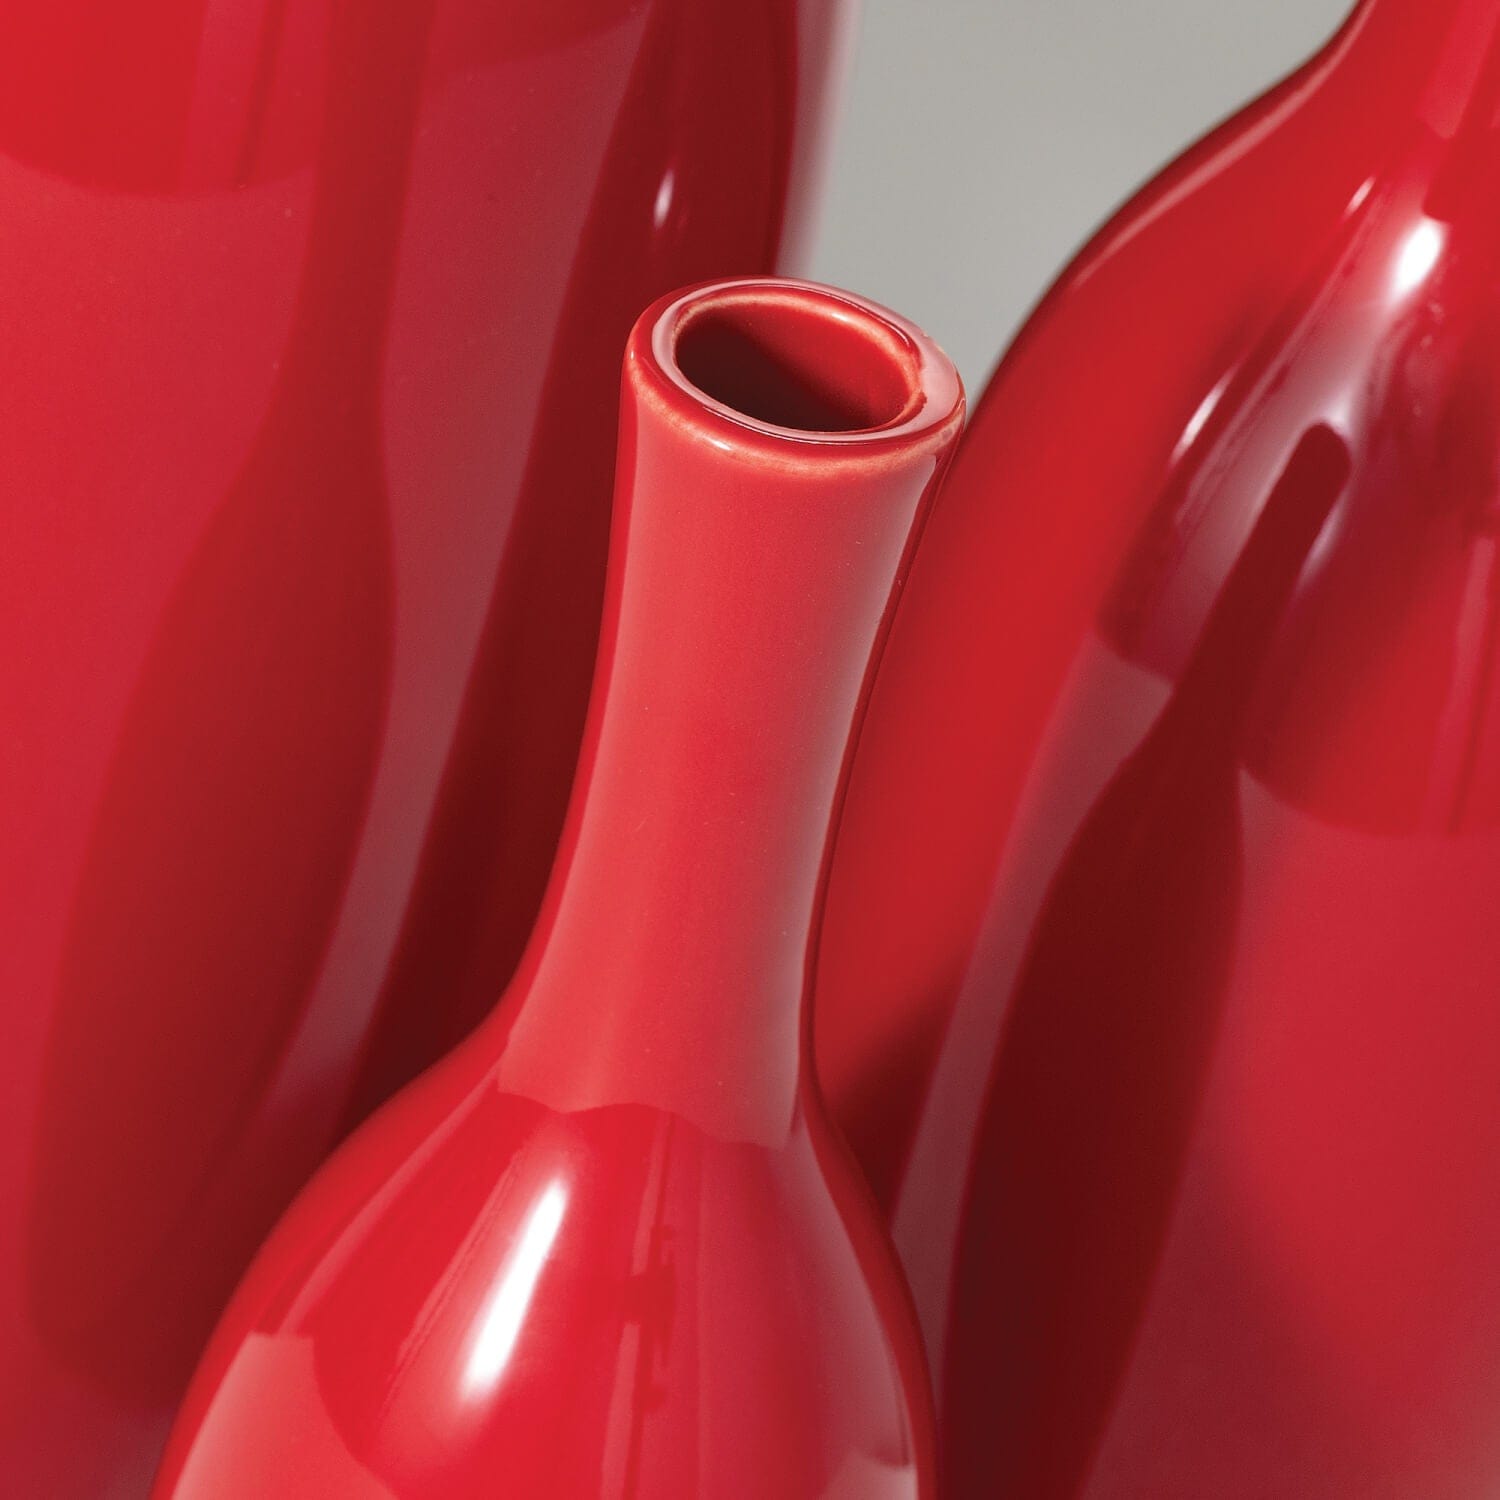 Glazed Ceramic Red Vases Elevate Home Decor - Vases